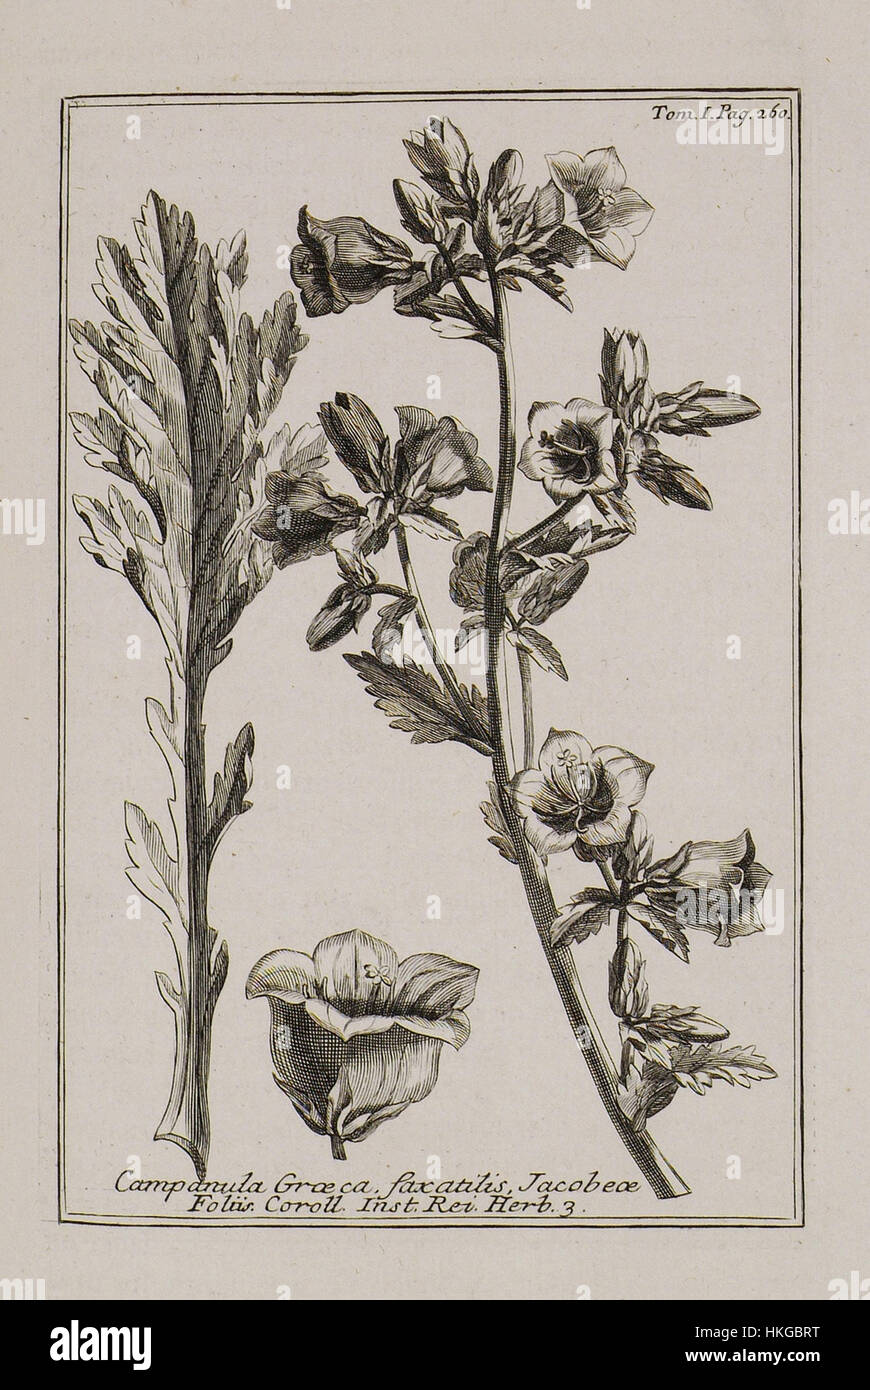 Campanula Graeca, faxatilis Jacobae folio Coroll Inst Rei herb 3   Tournefort Joseph Pitton De   1717 Stock Photo